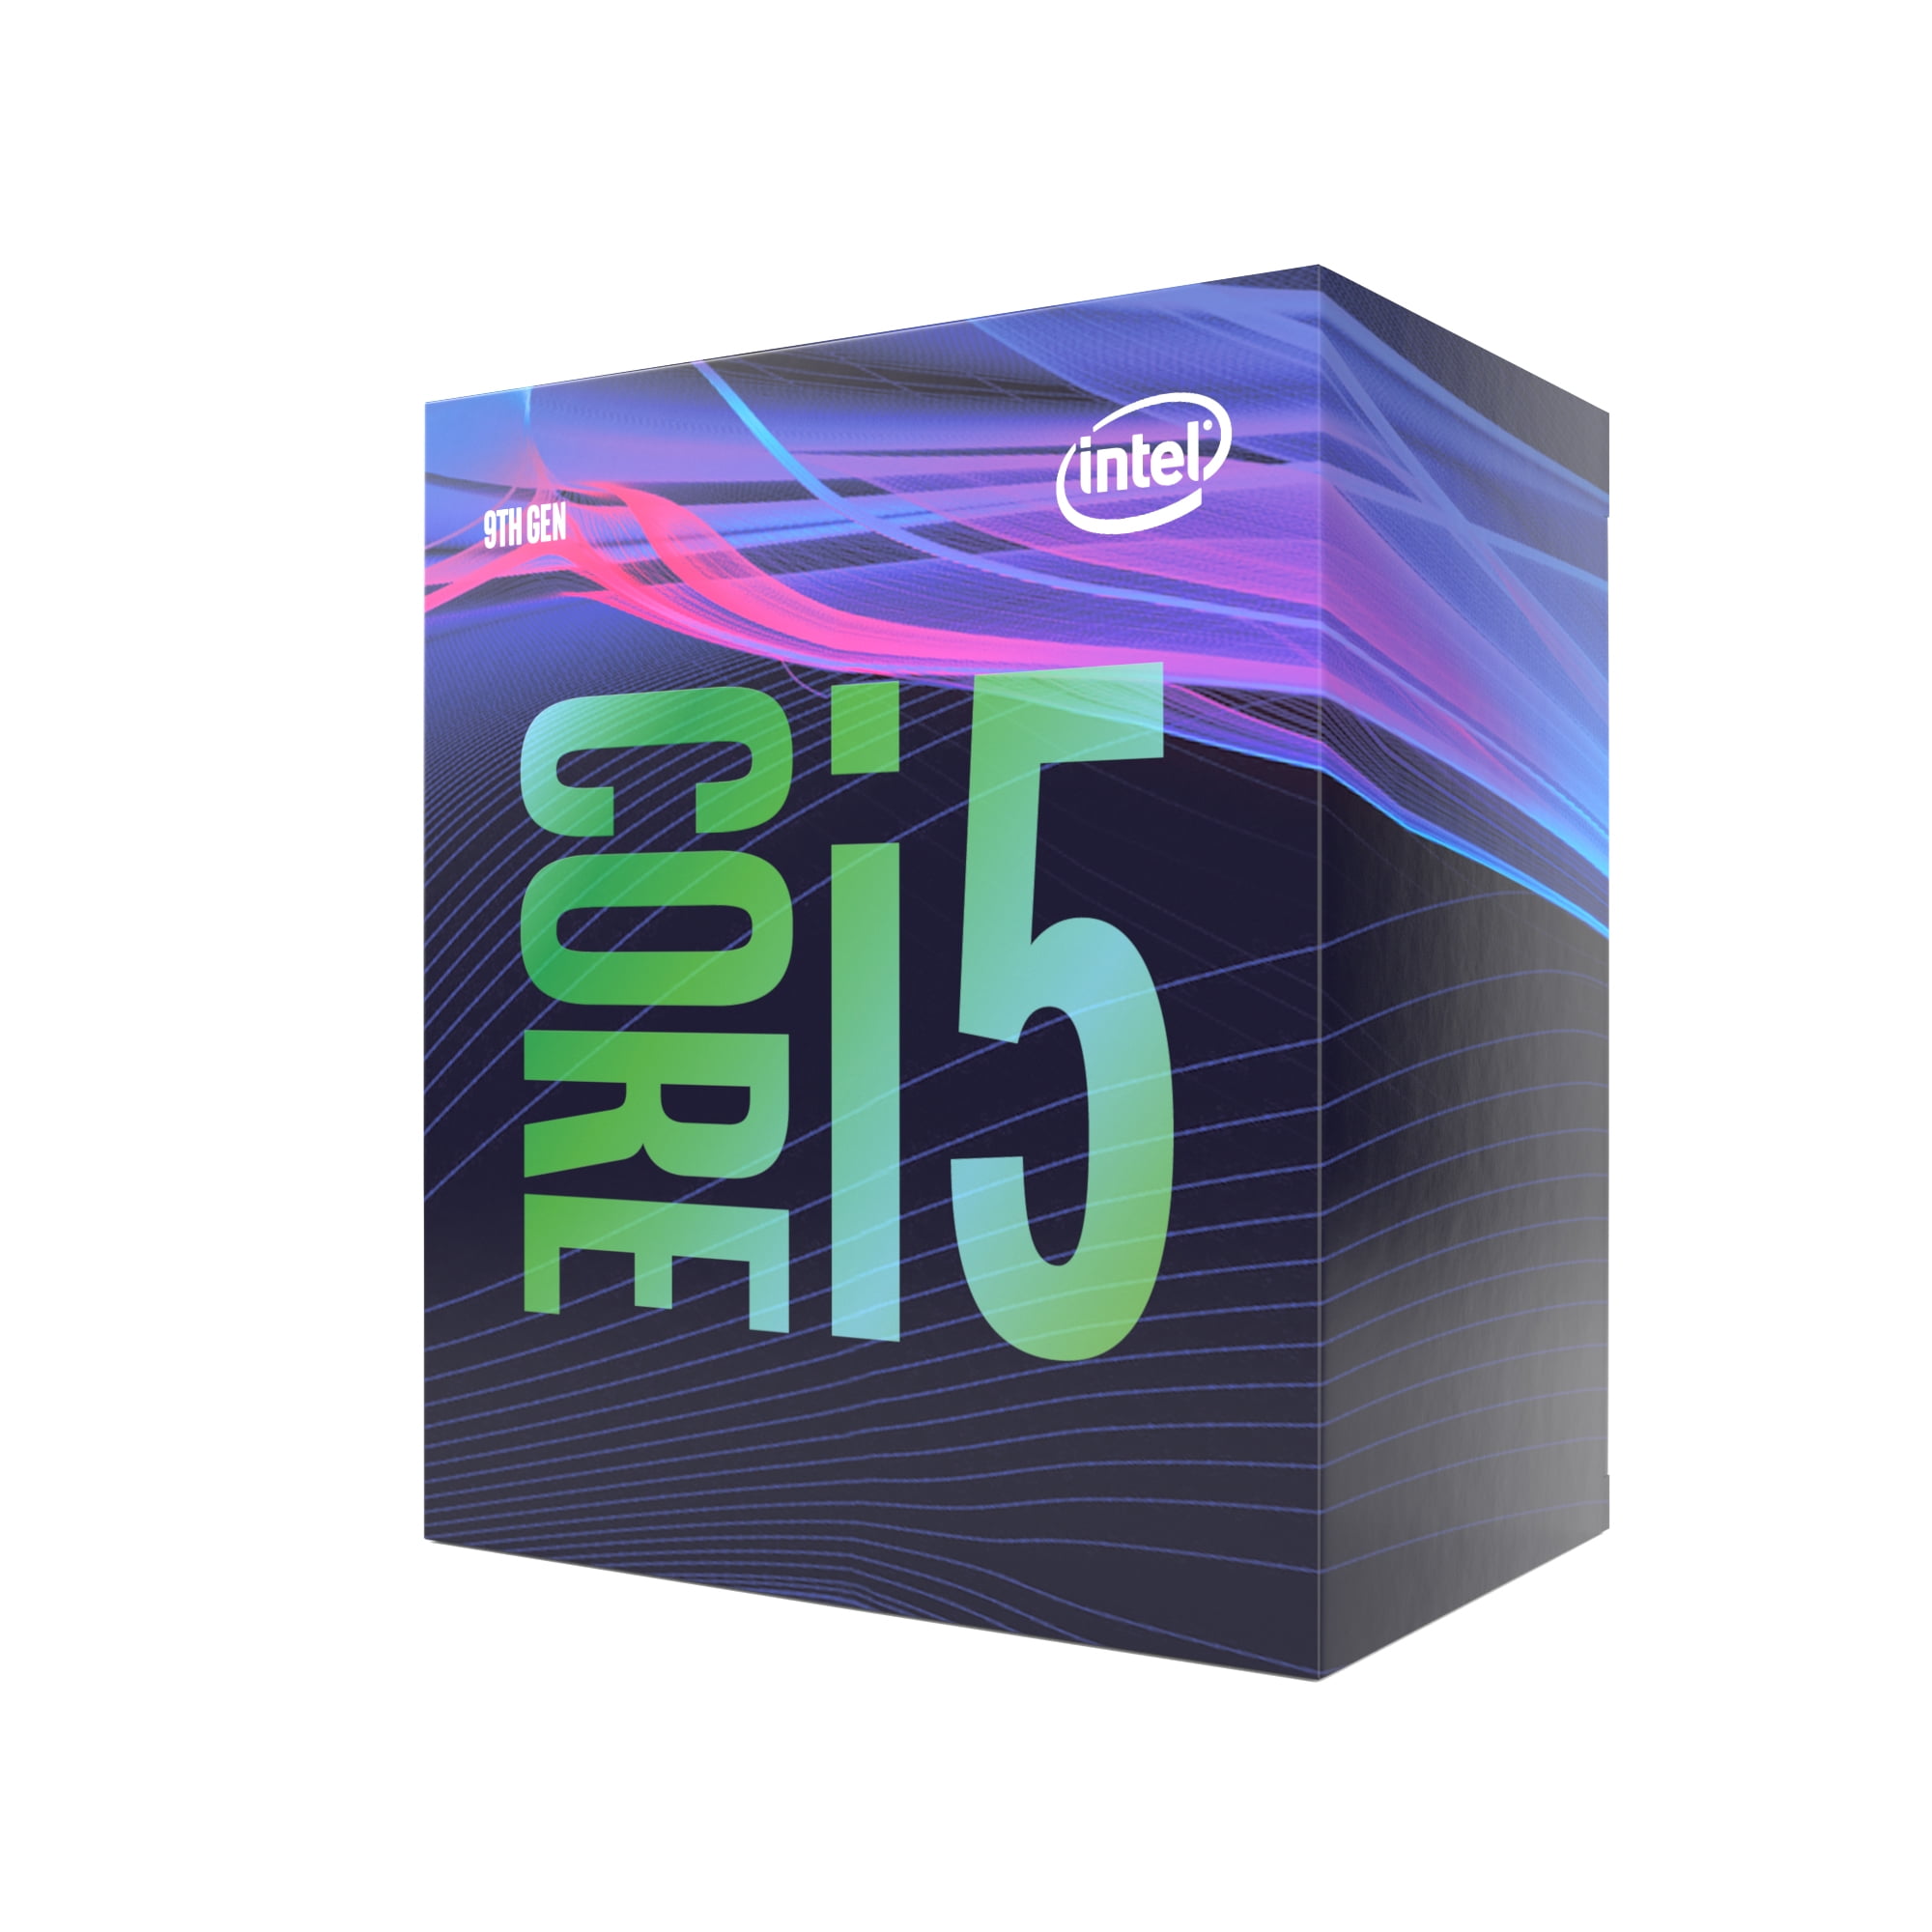 Intel Core i5-9400F Hexa-core (6 Core) 2.9GHz Processor - Retail Pack